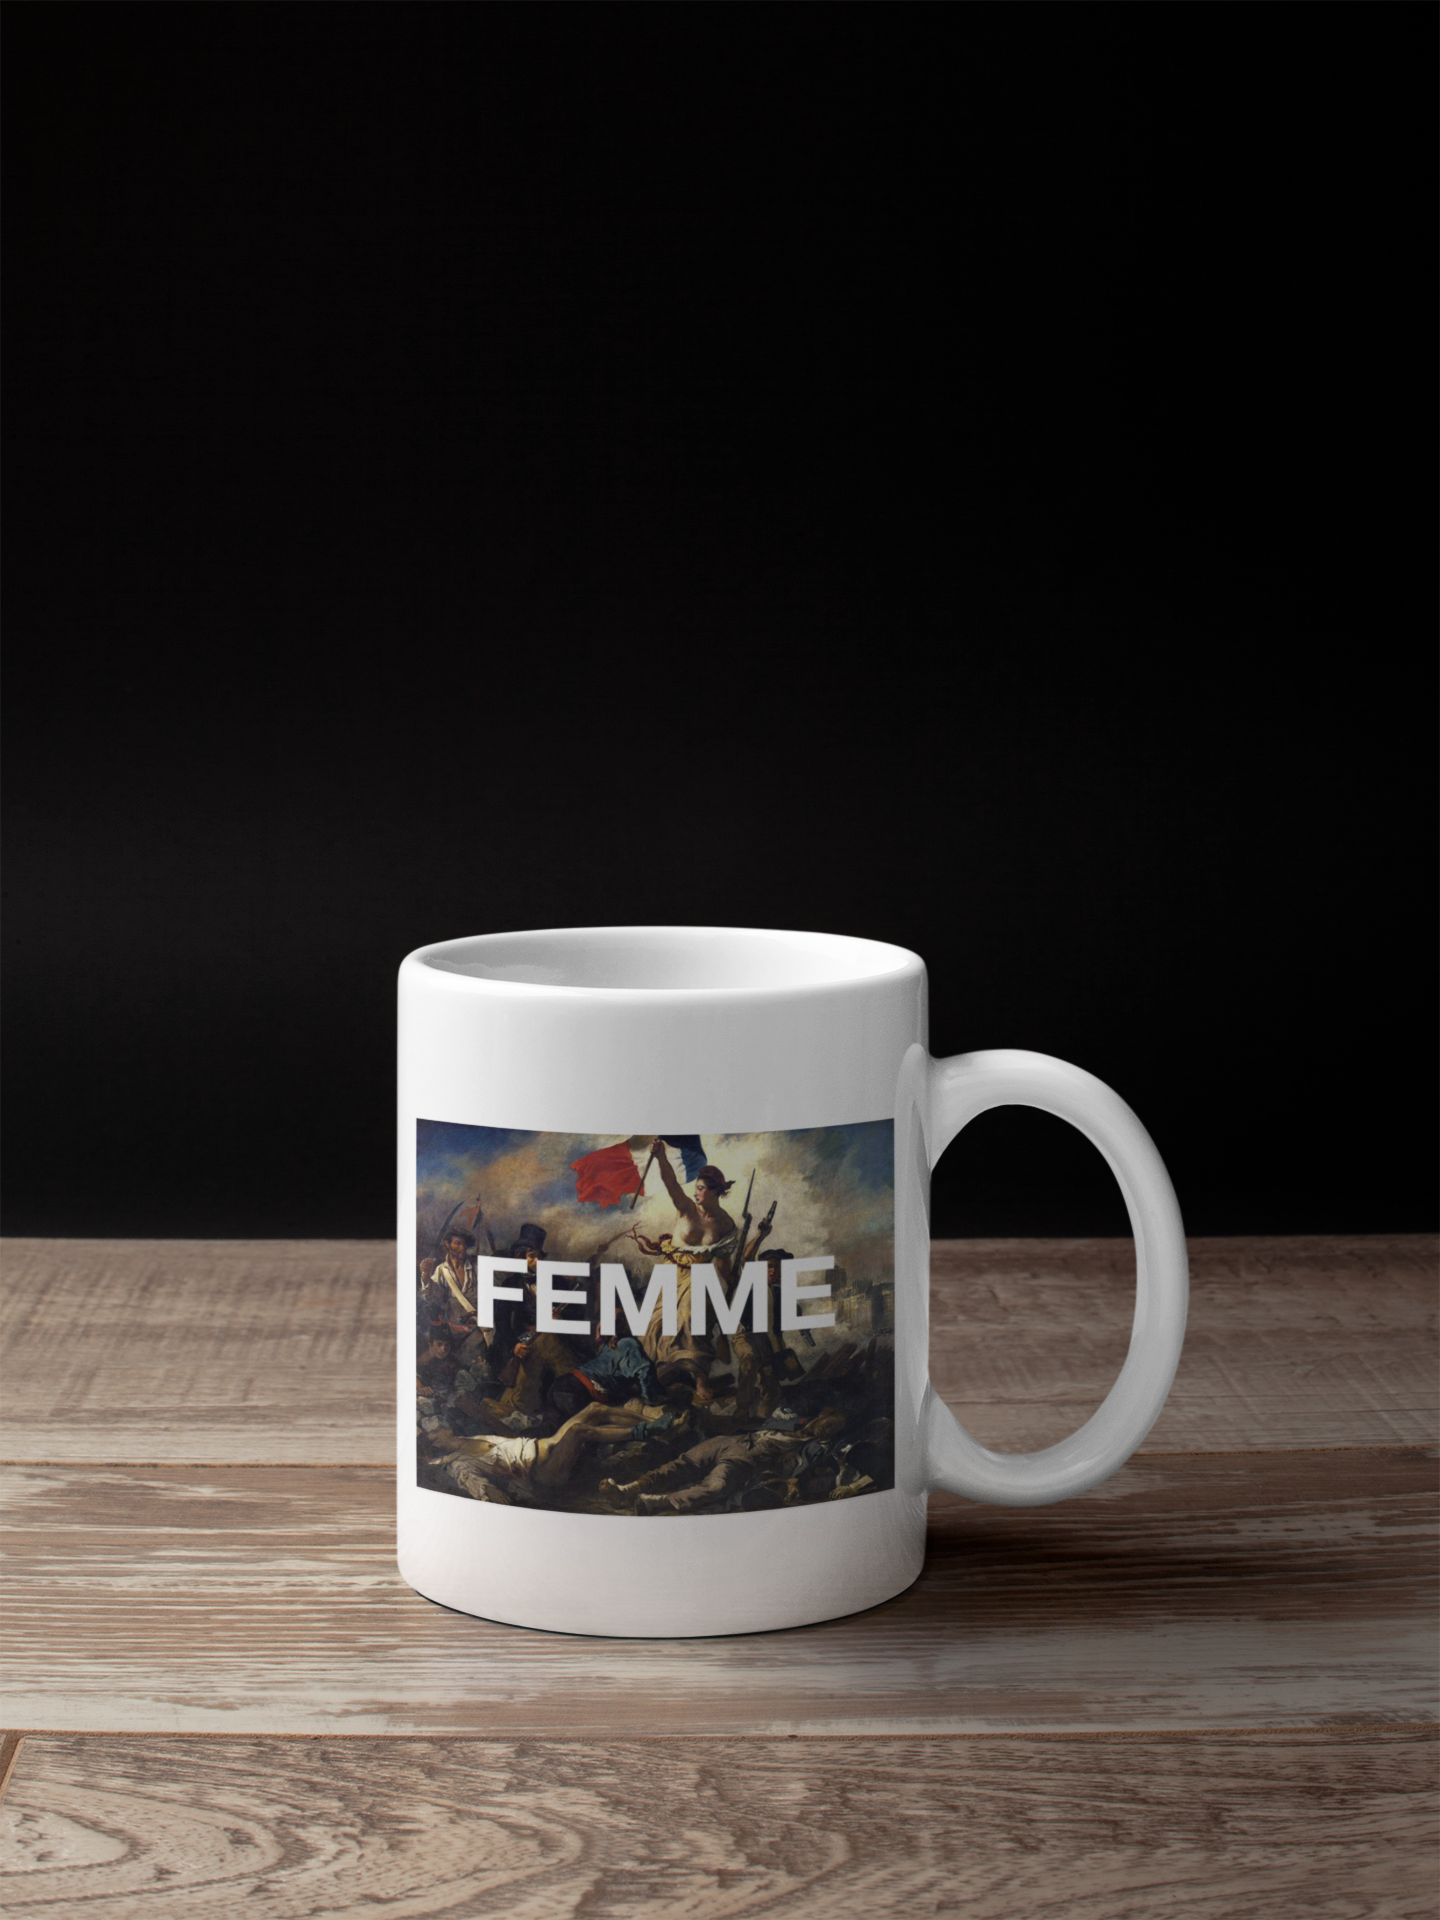 Mug "FEMME"